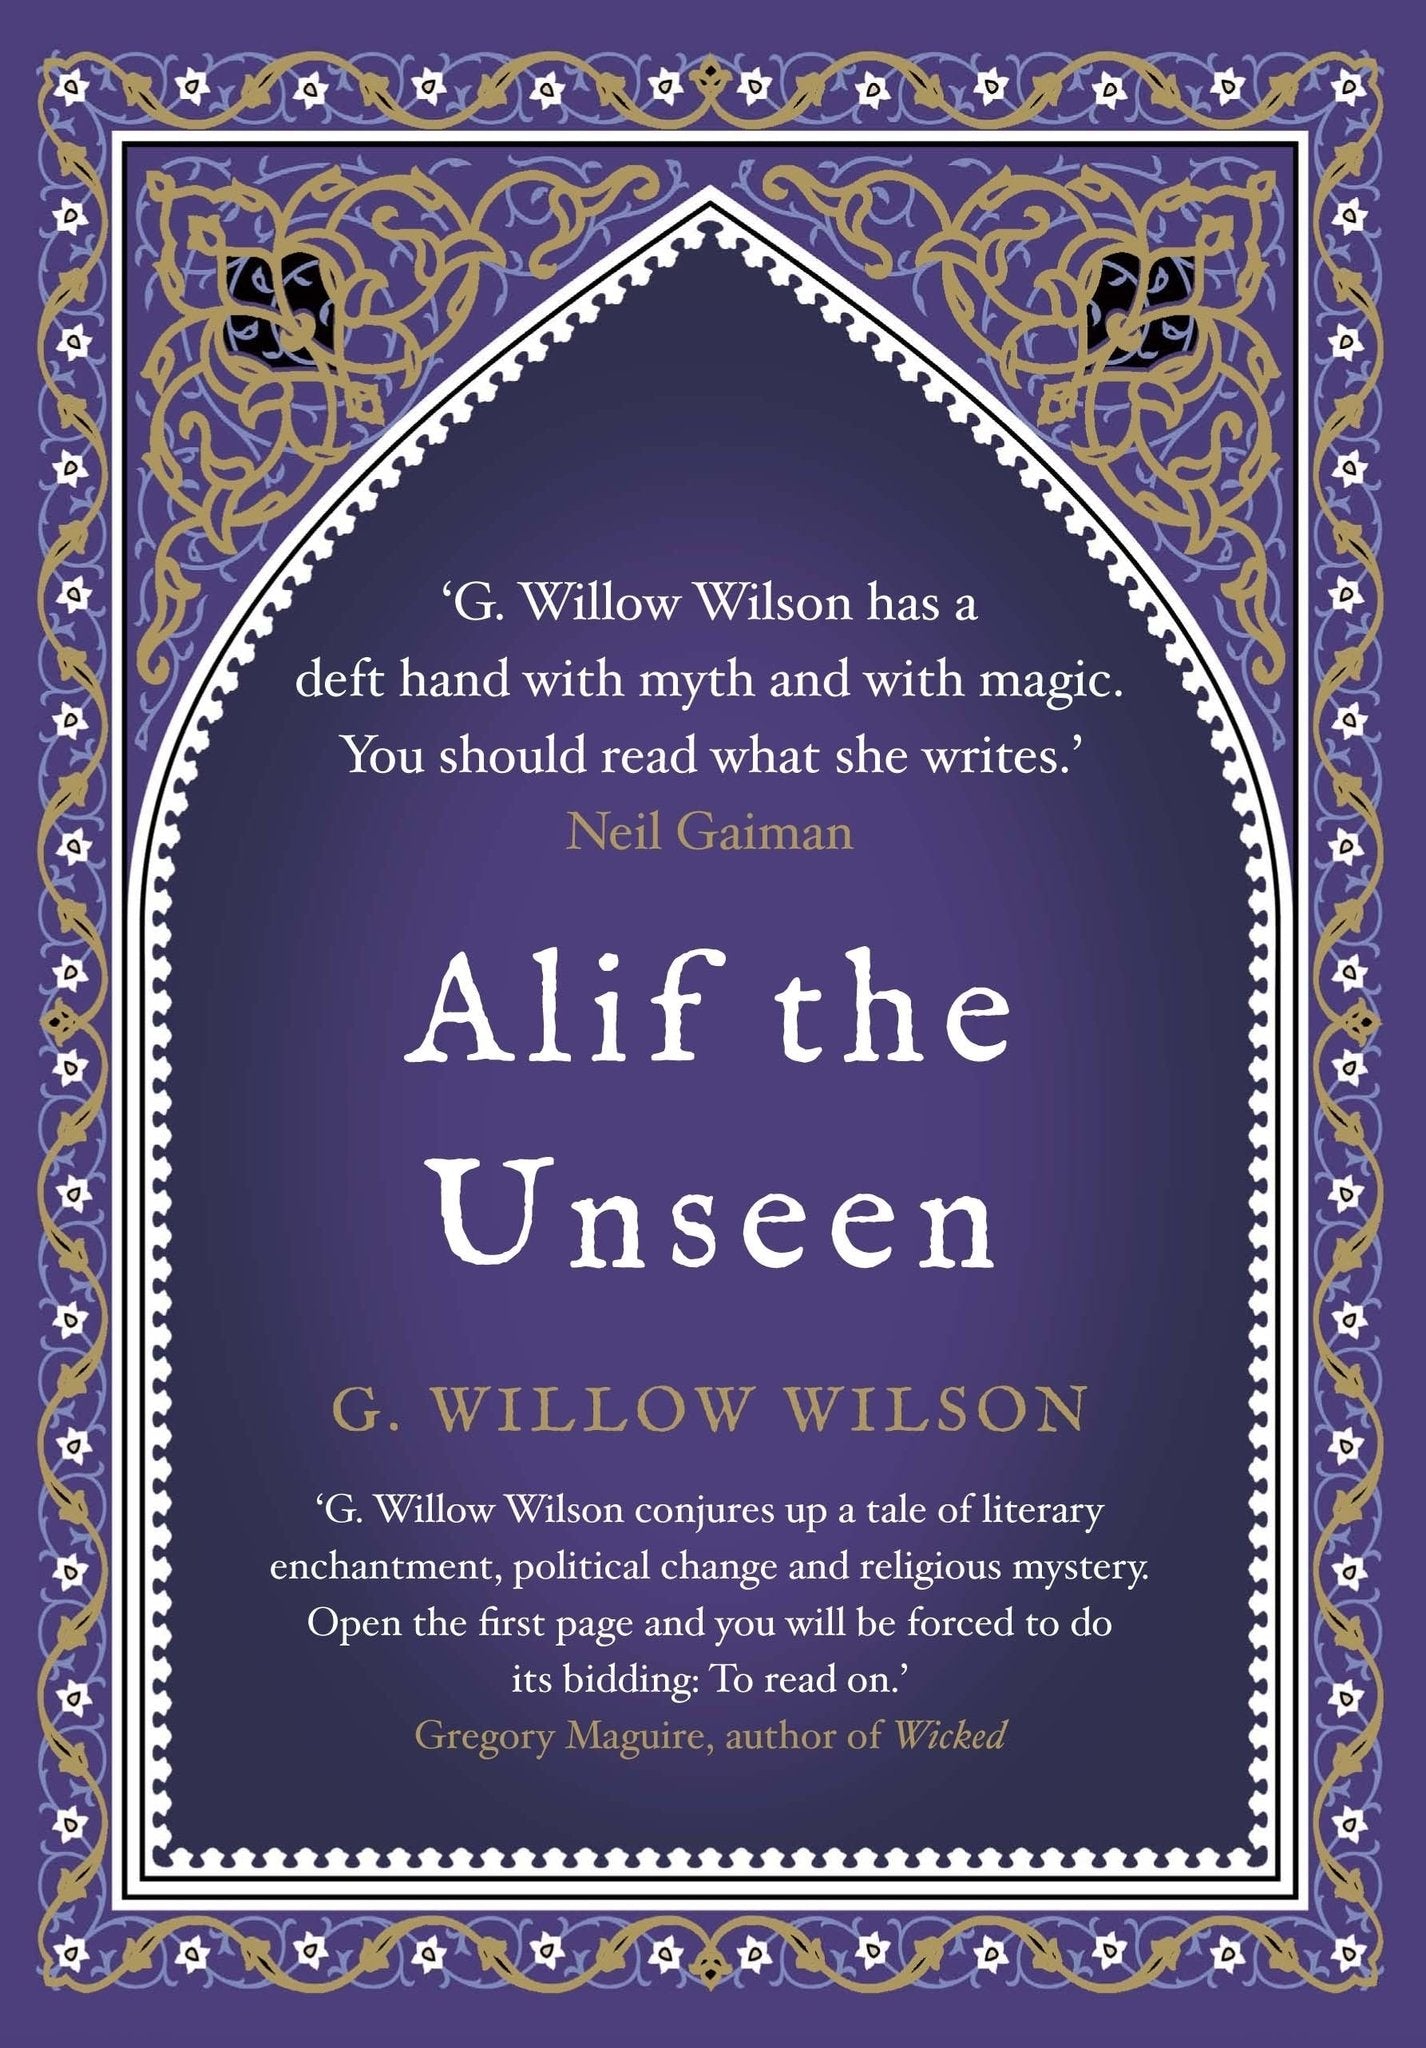 Alif the Unseen by G. Willow Wilson Communitea Books, Online Bookstore, Blog, & Gallery